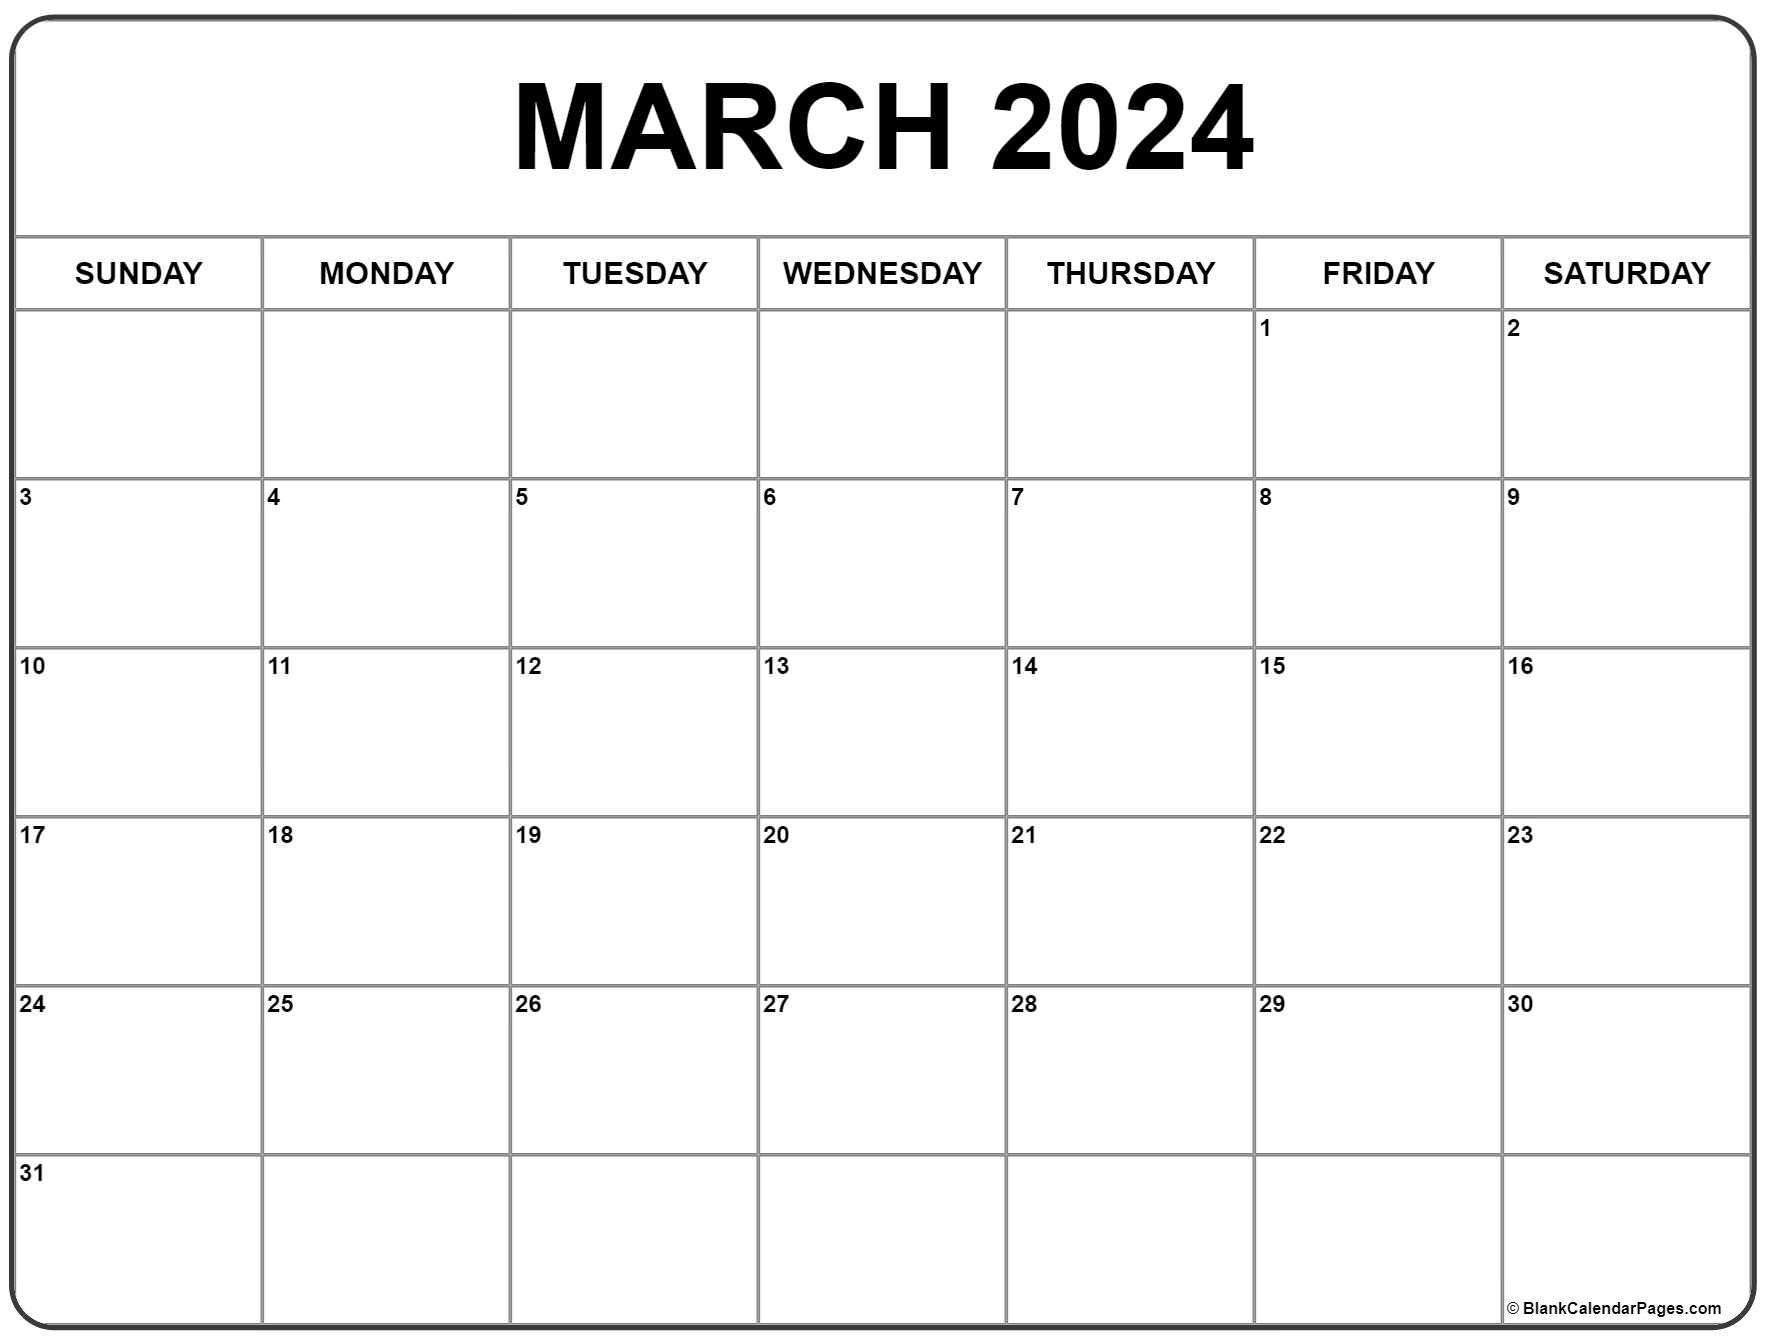 Free March 2022 Calendar Template March 2022 Calendar | Free Printable Calendar Templates